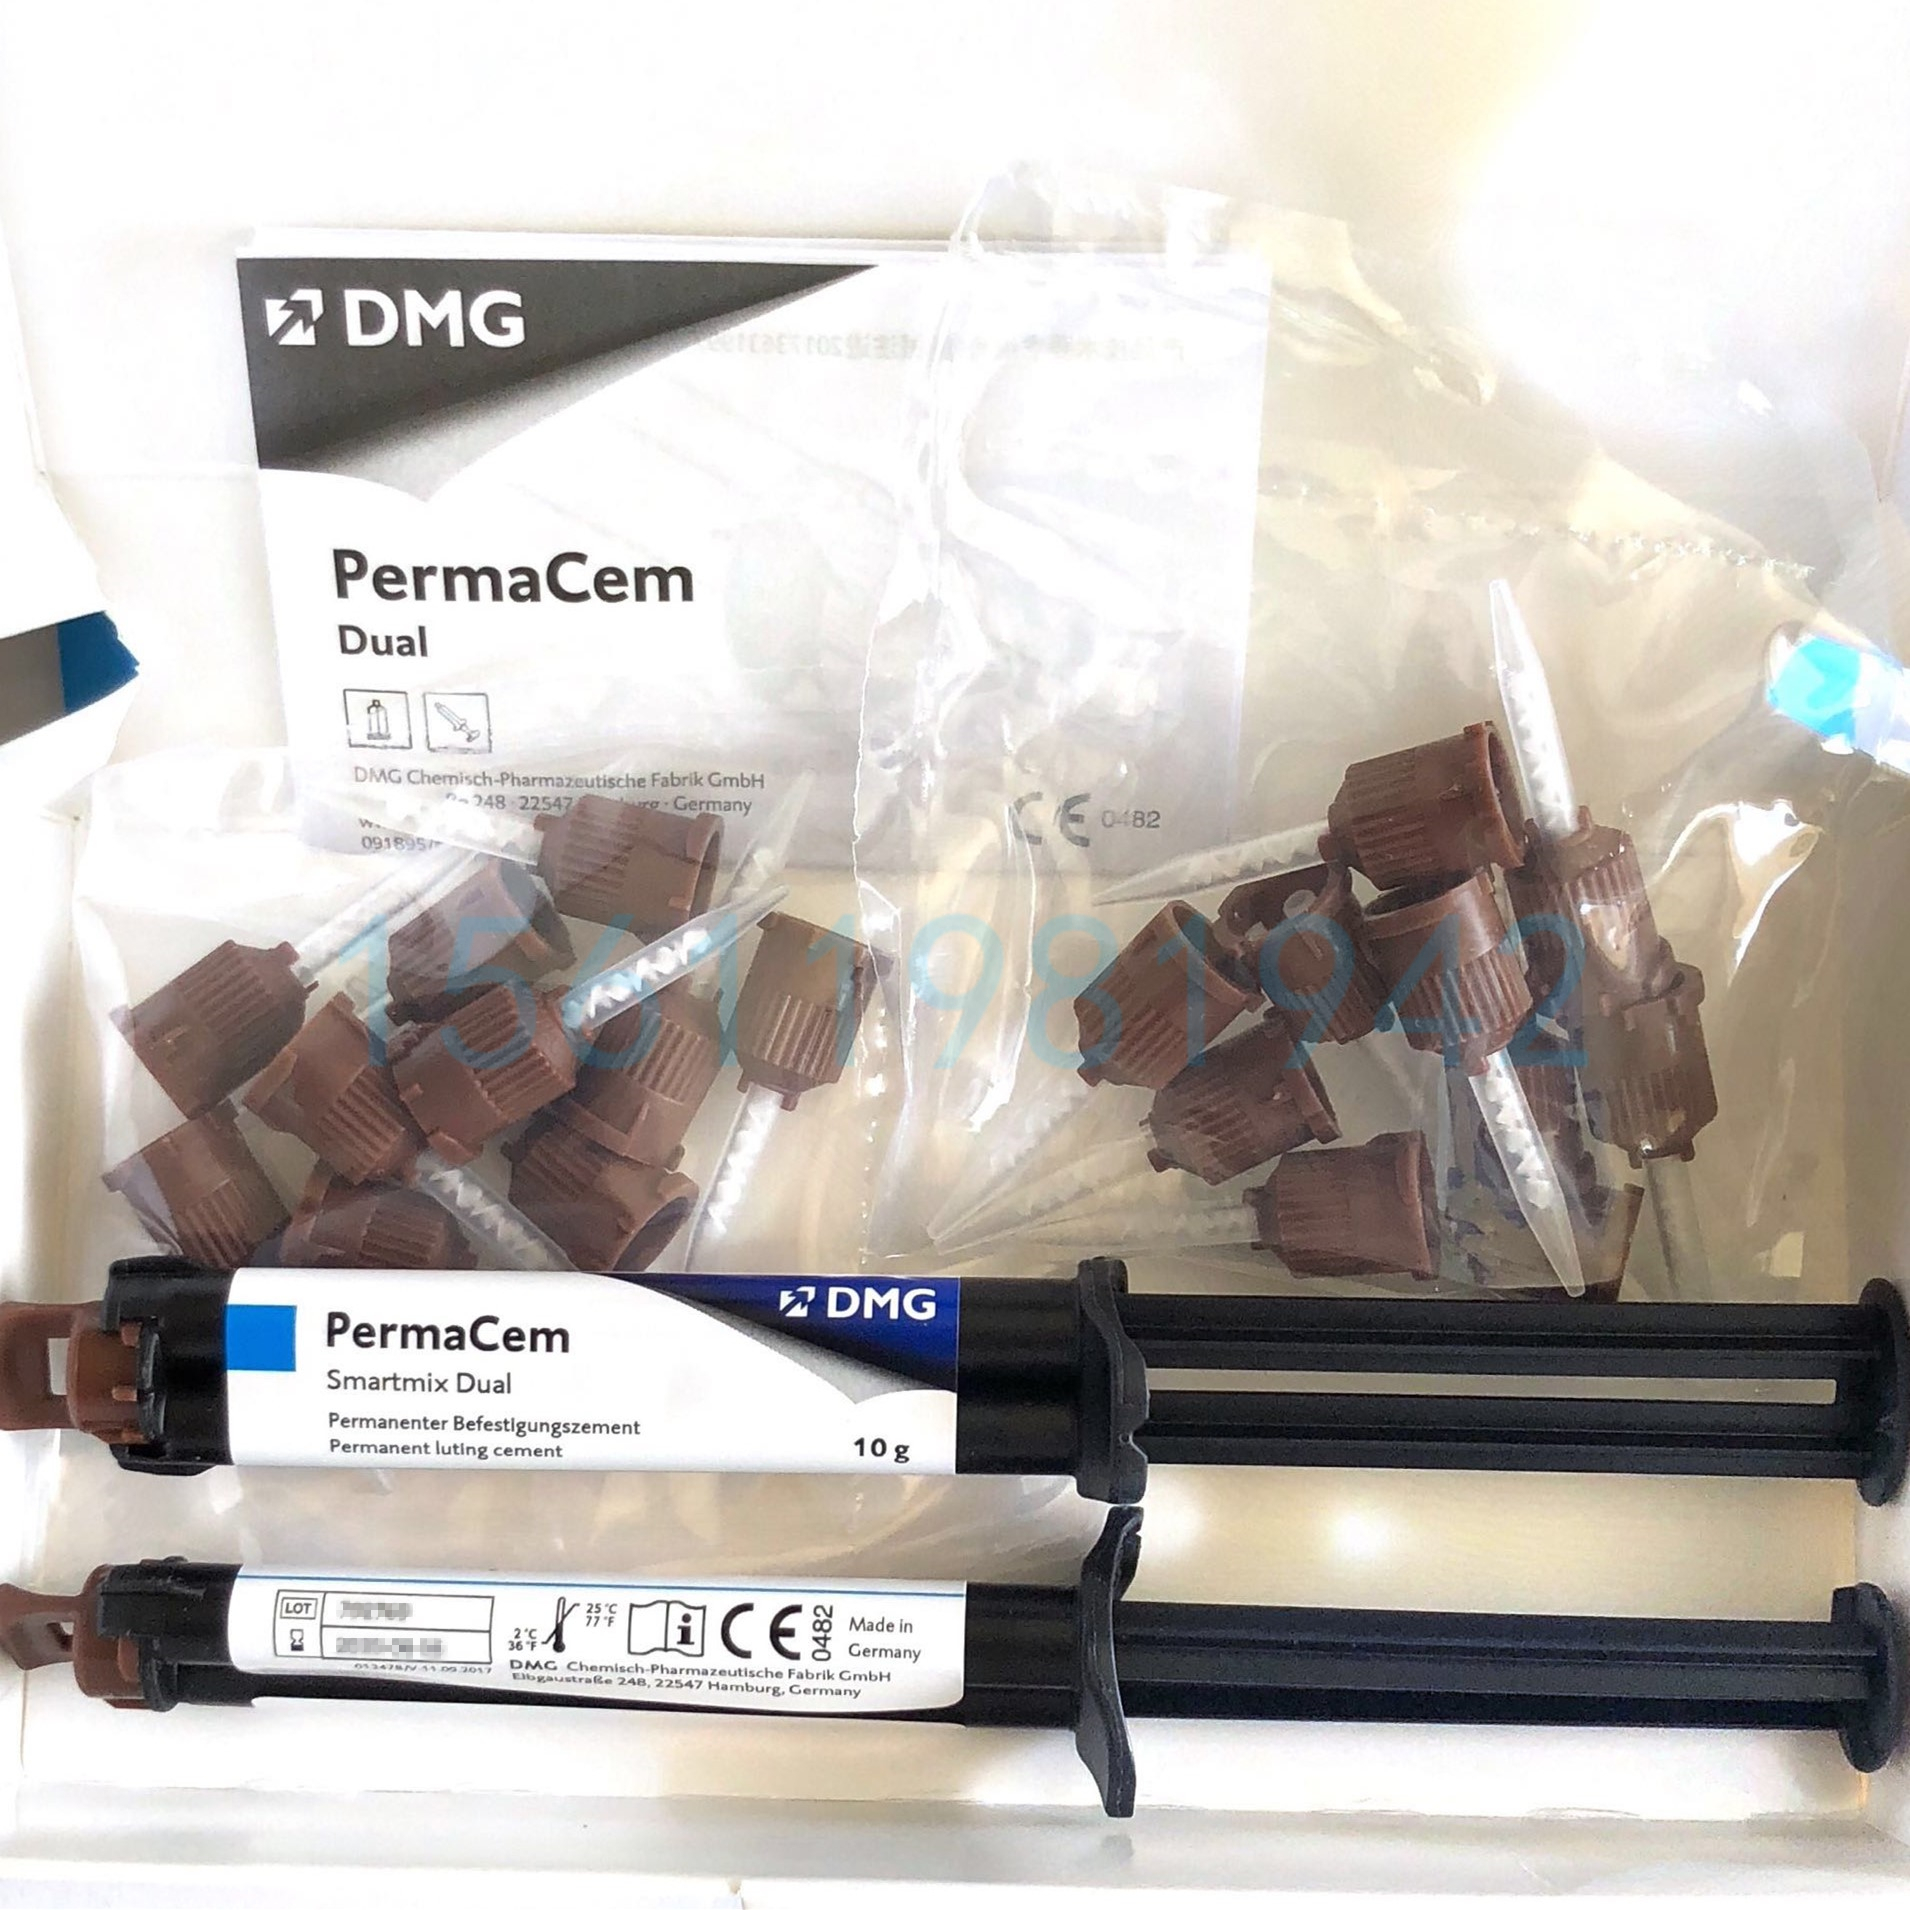 DMG PermaCem普玛 双固化复合体粘接剂   10g/支